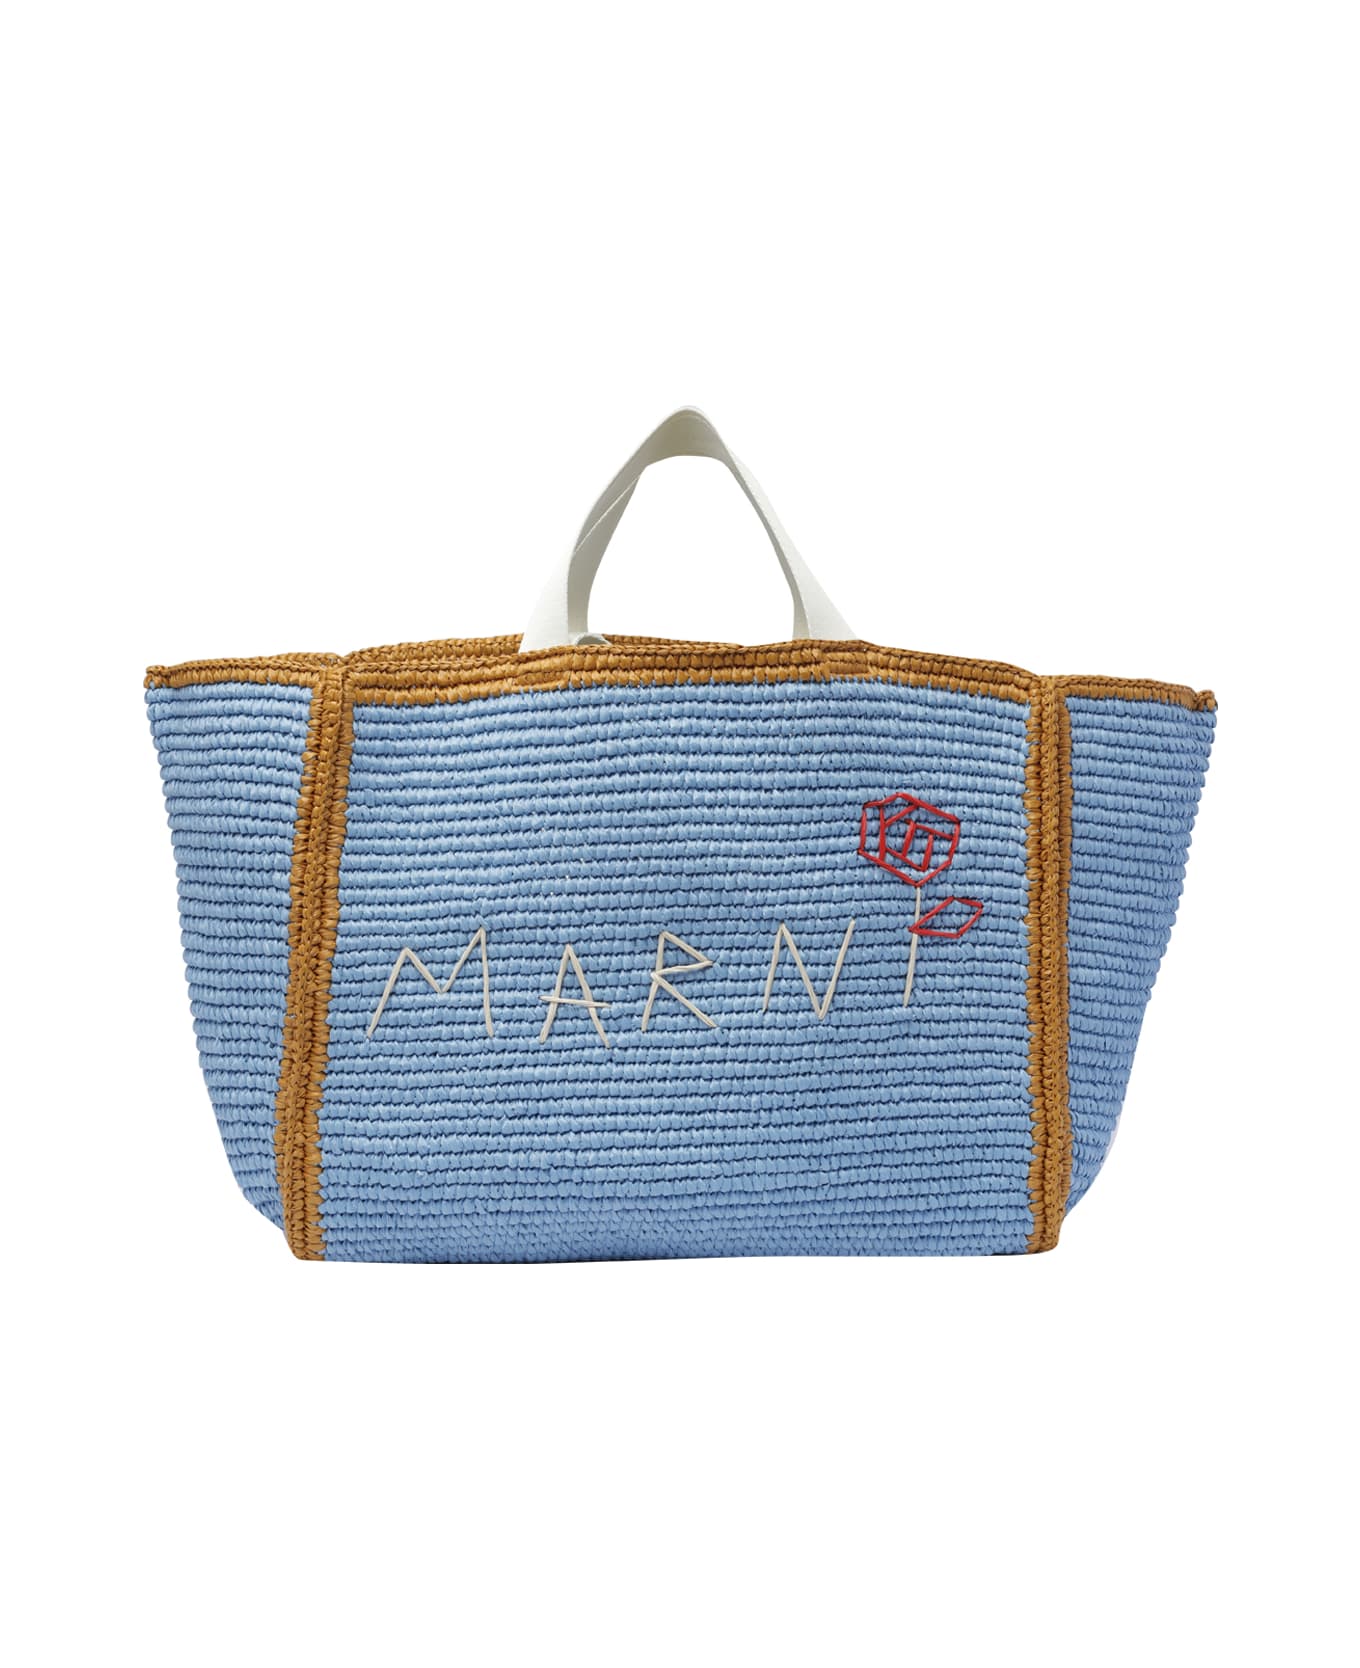 Marni Sillo Shopping Bag - Blue